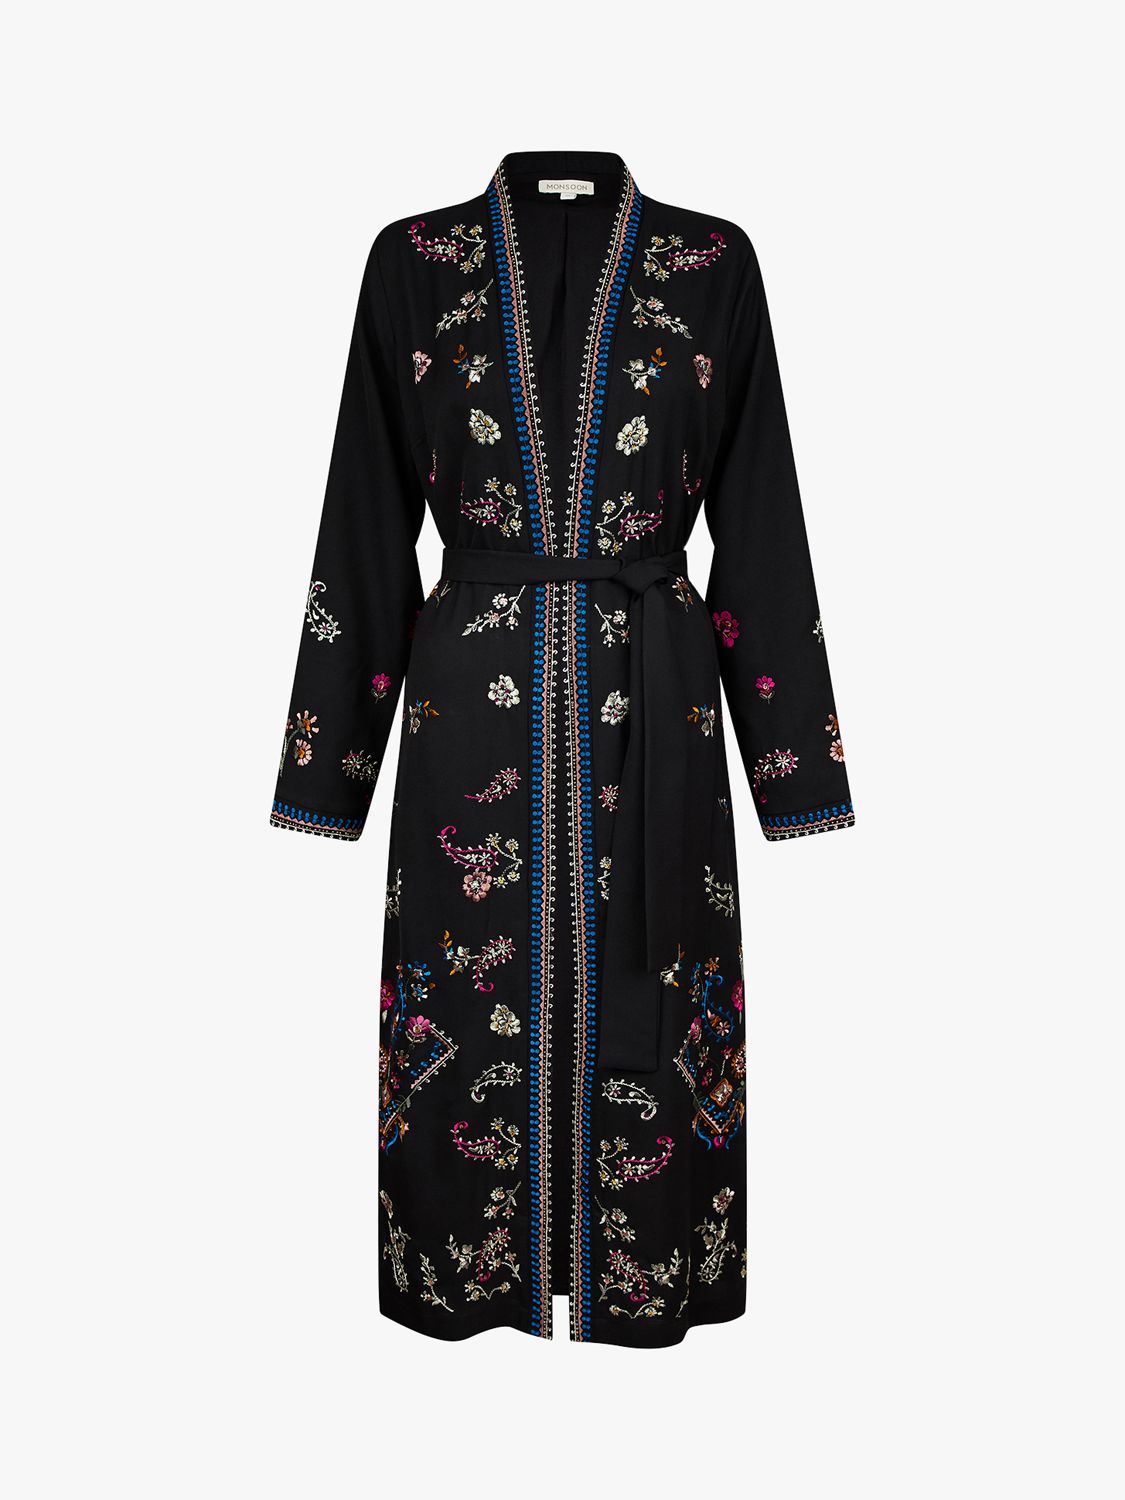 Monsoon Raja Embroidered Kimono, Black at John Lewis & Partners